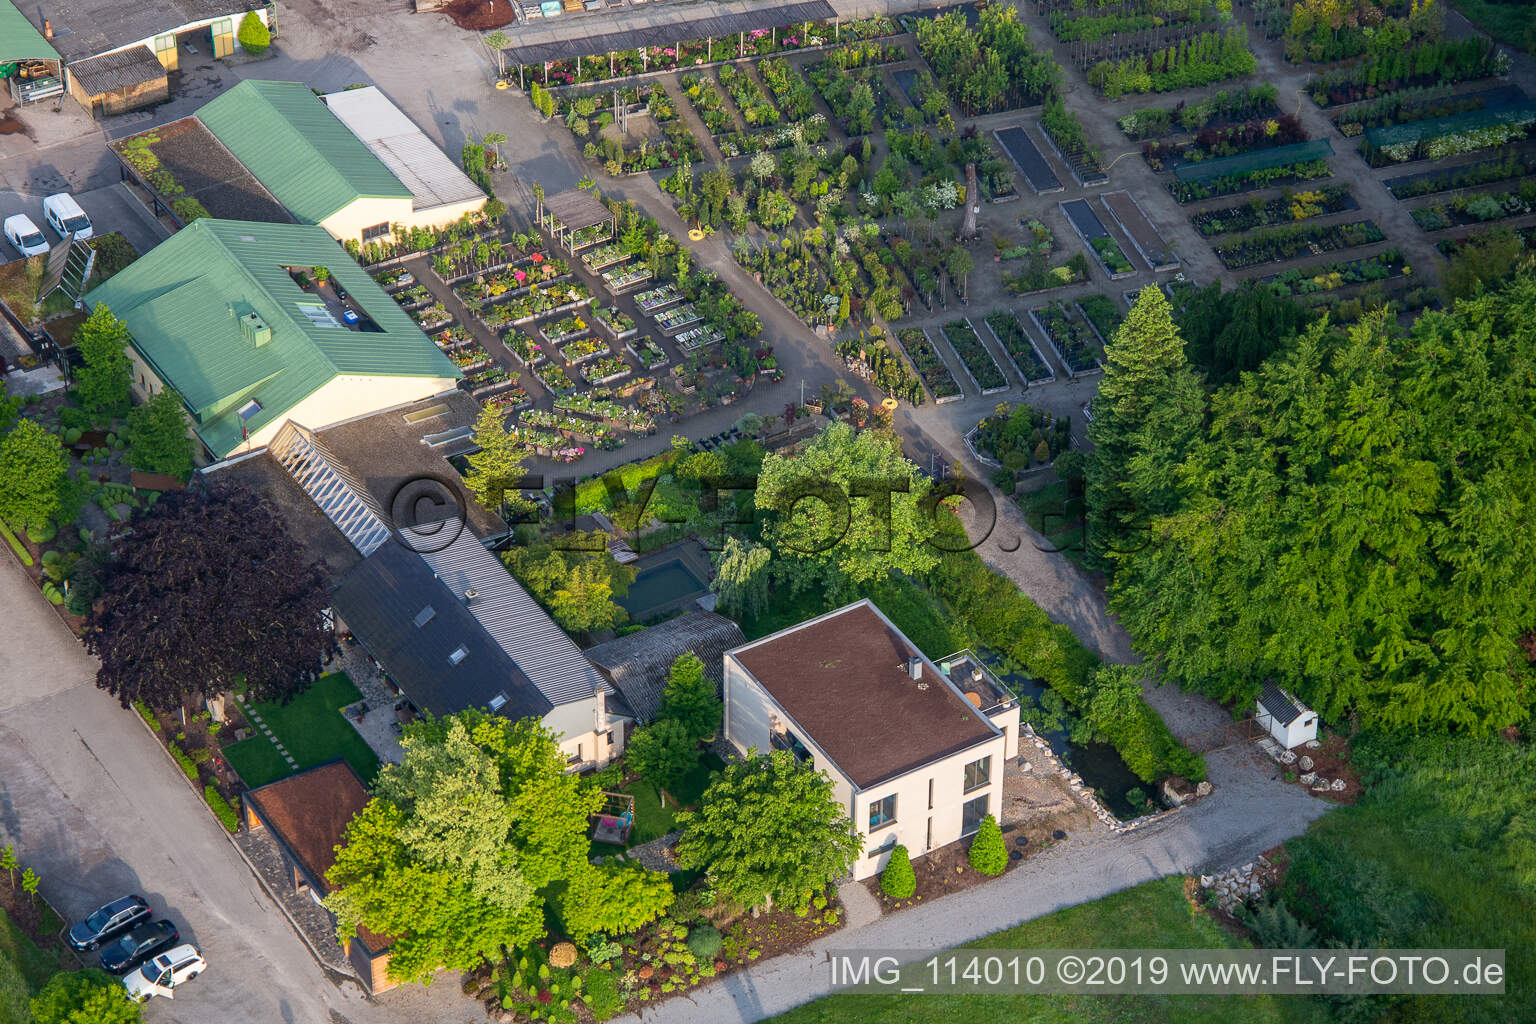 Bienwald tree nursery / Greentec in Berg in the state Rhineland-Palatinate, Germany seen from above